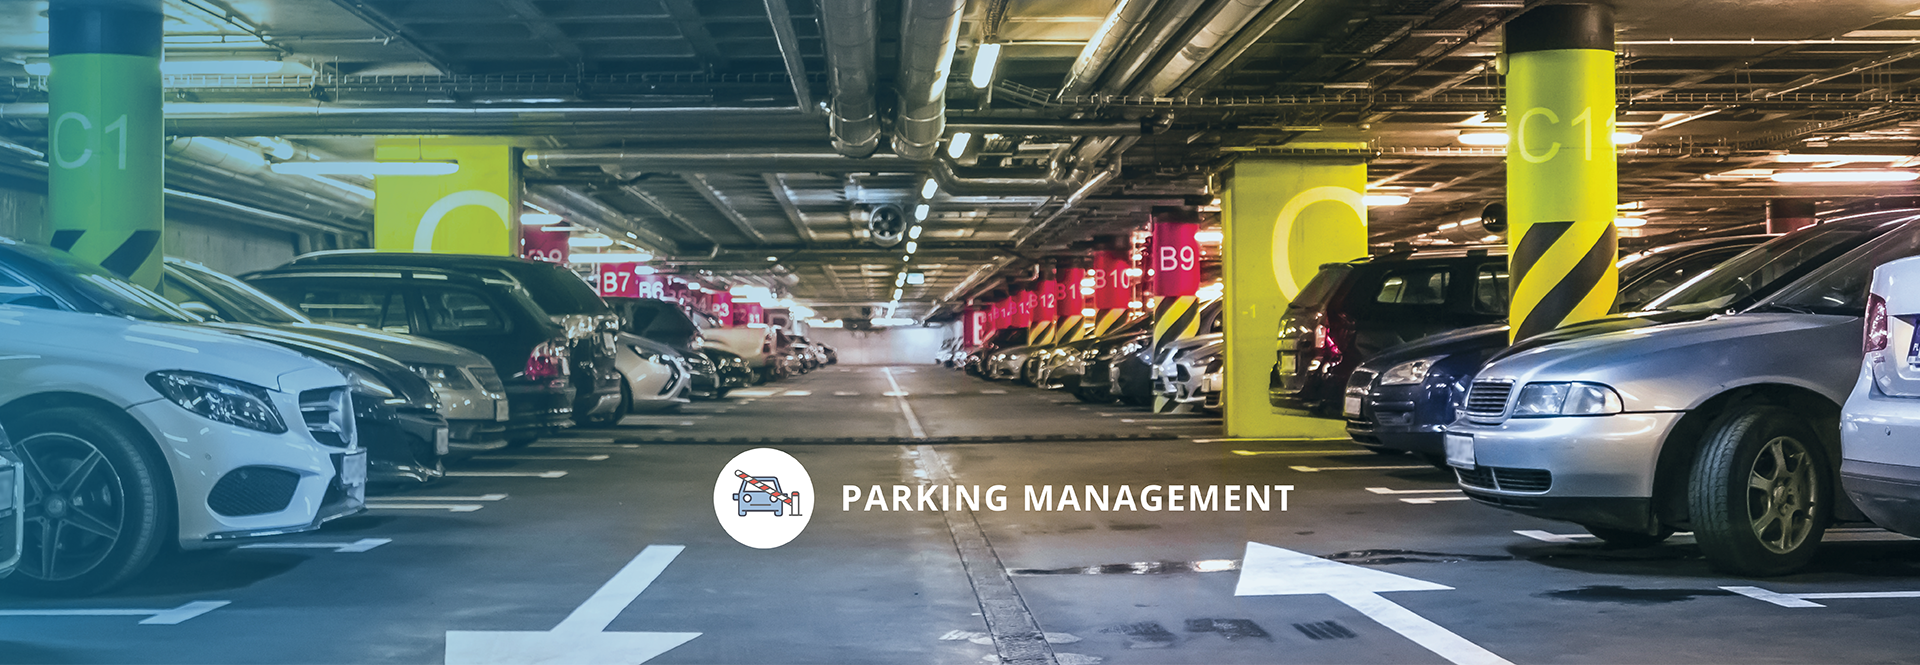 Predor - Parking Management